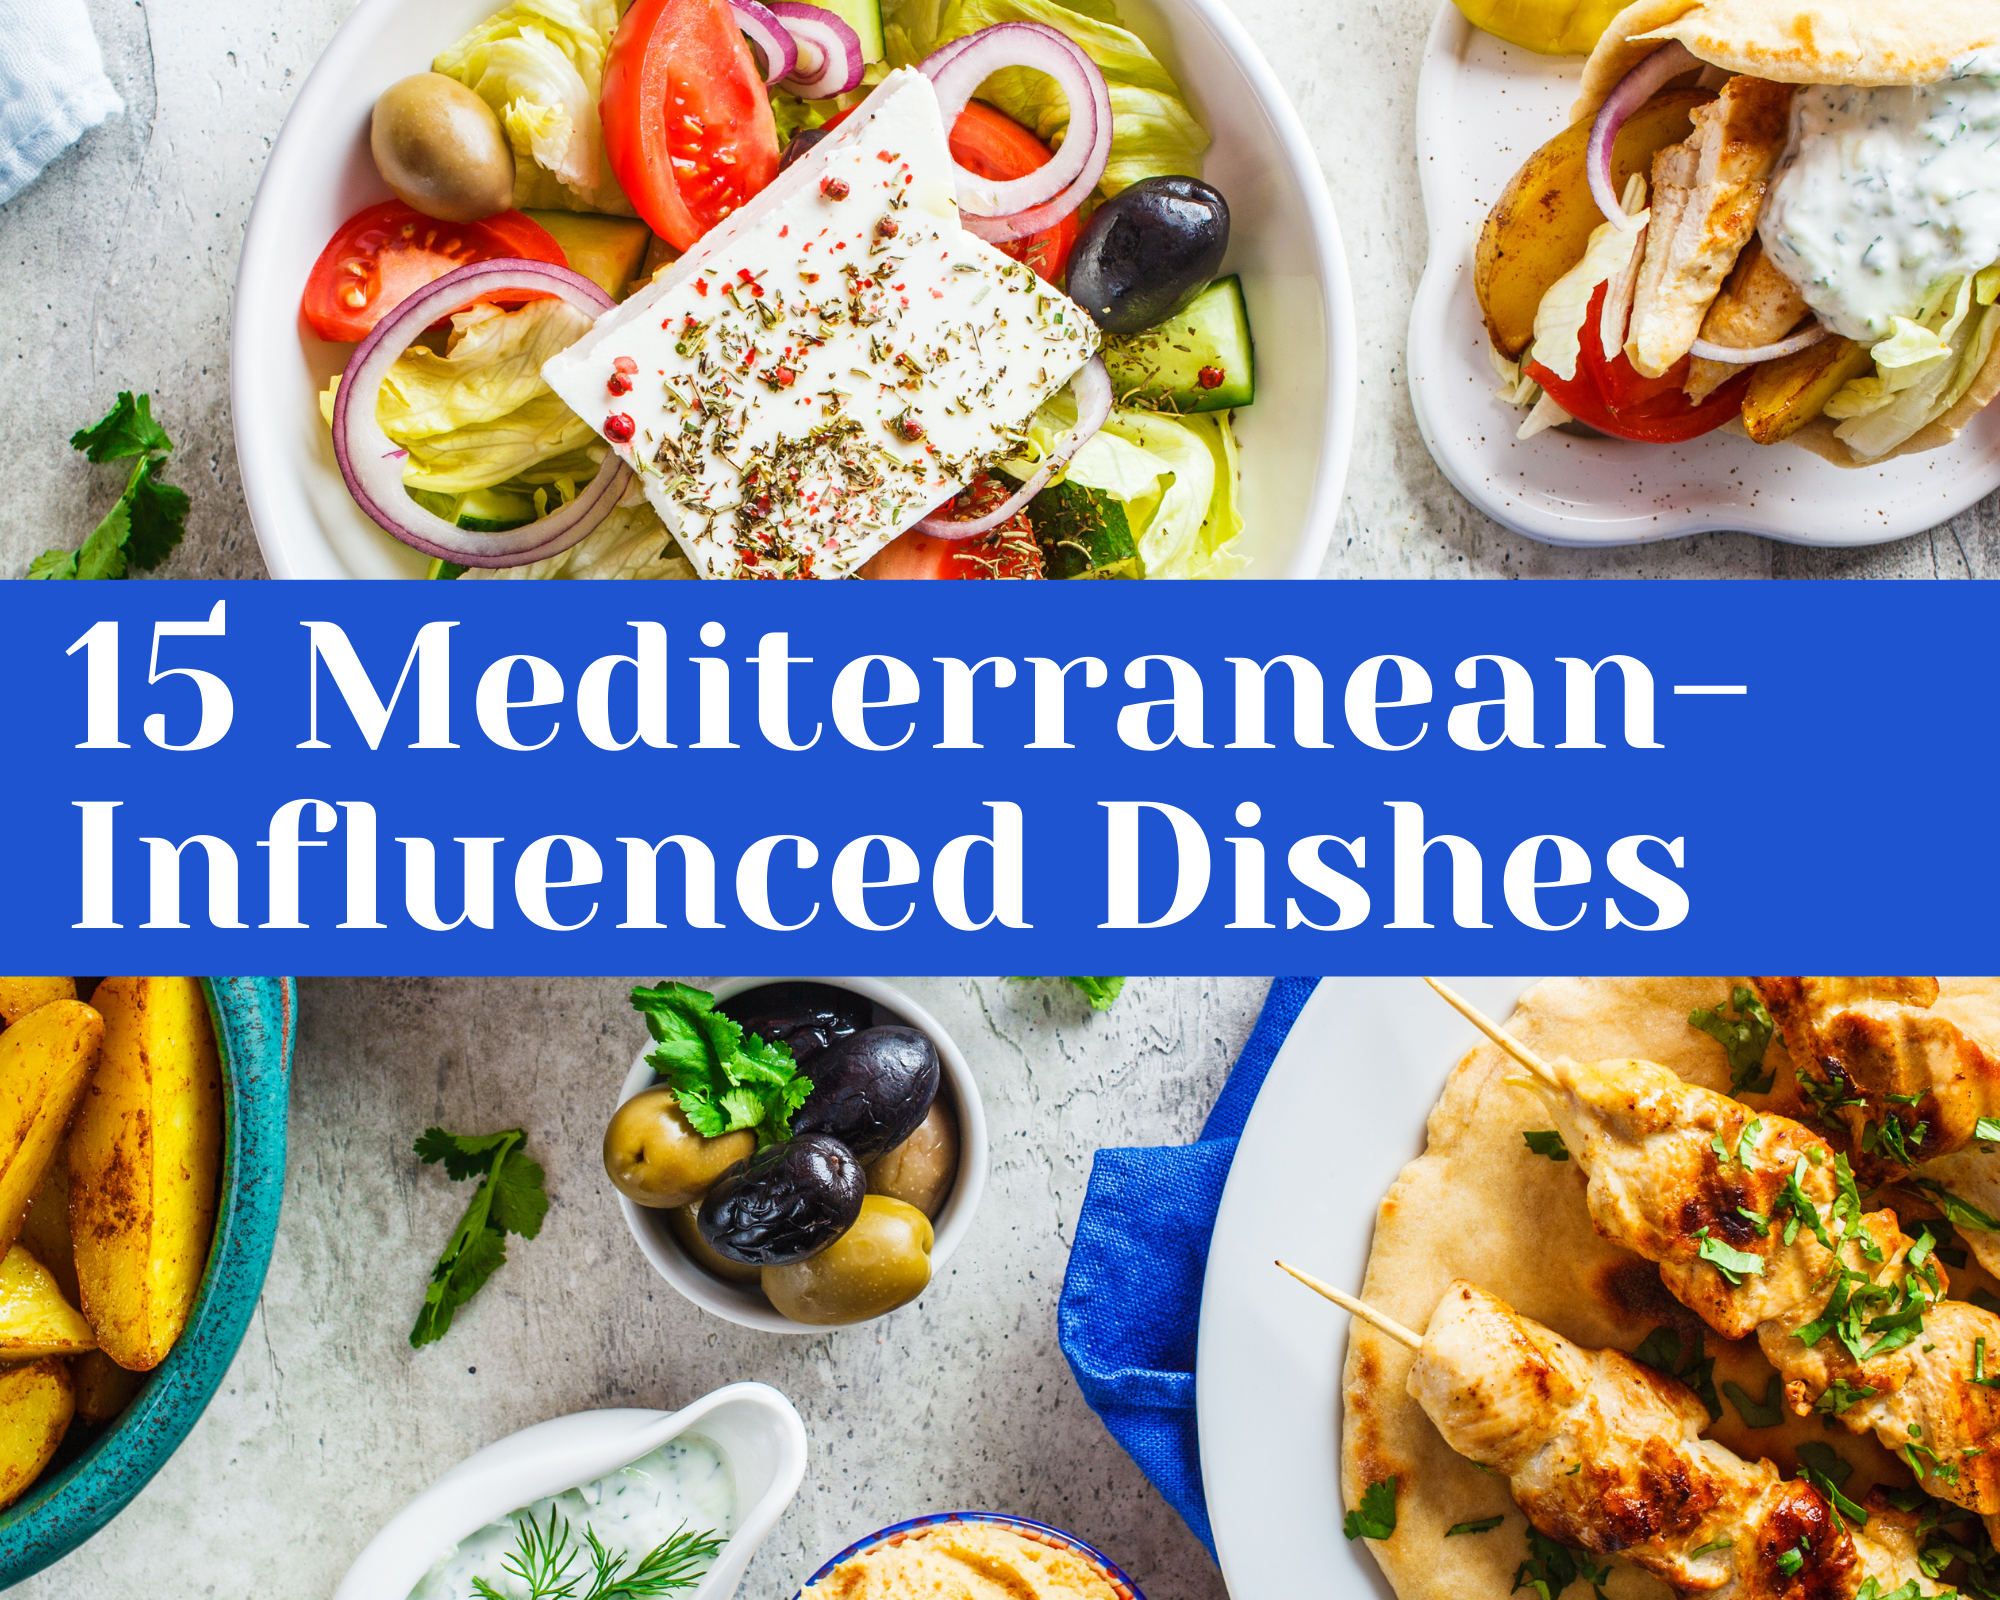 Mediterranean-Influenced Dishes